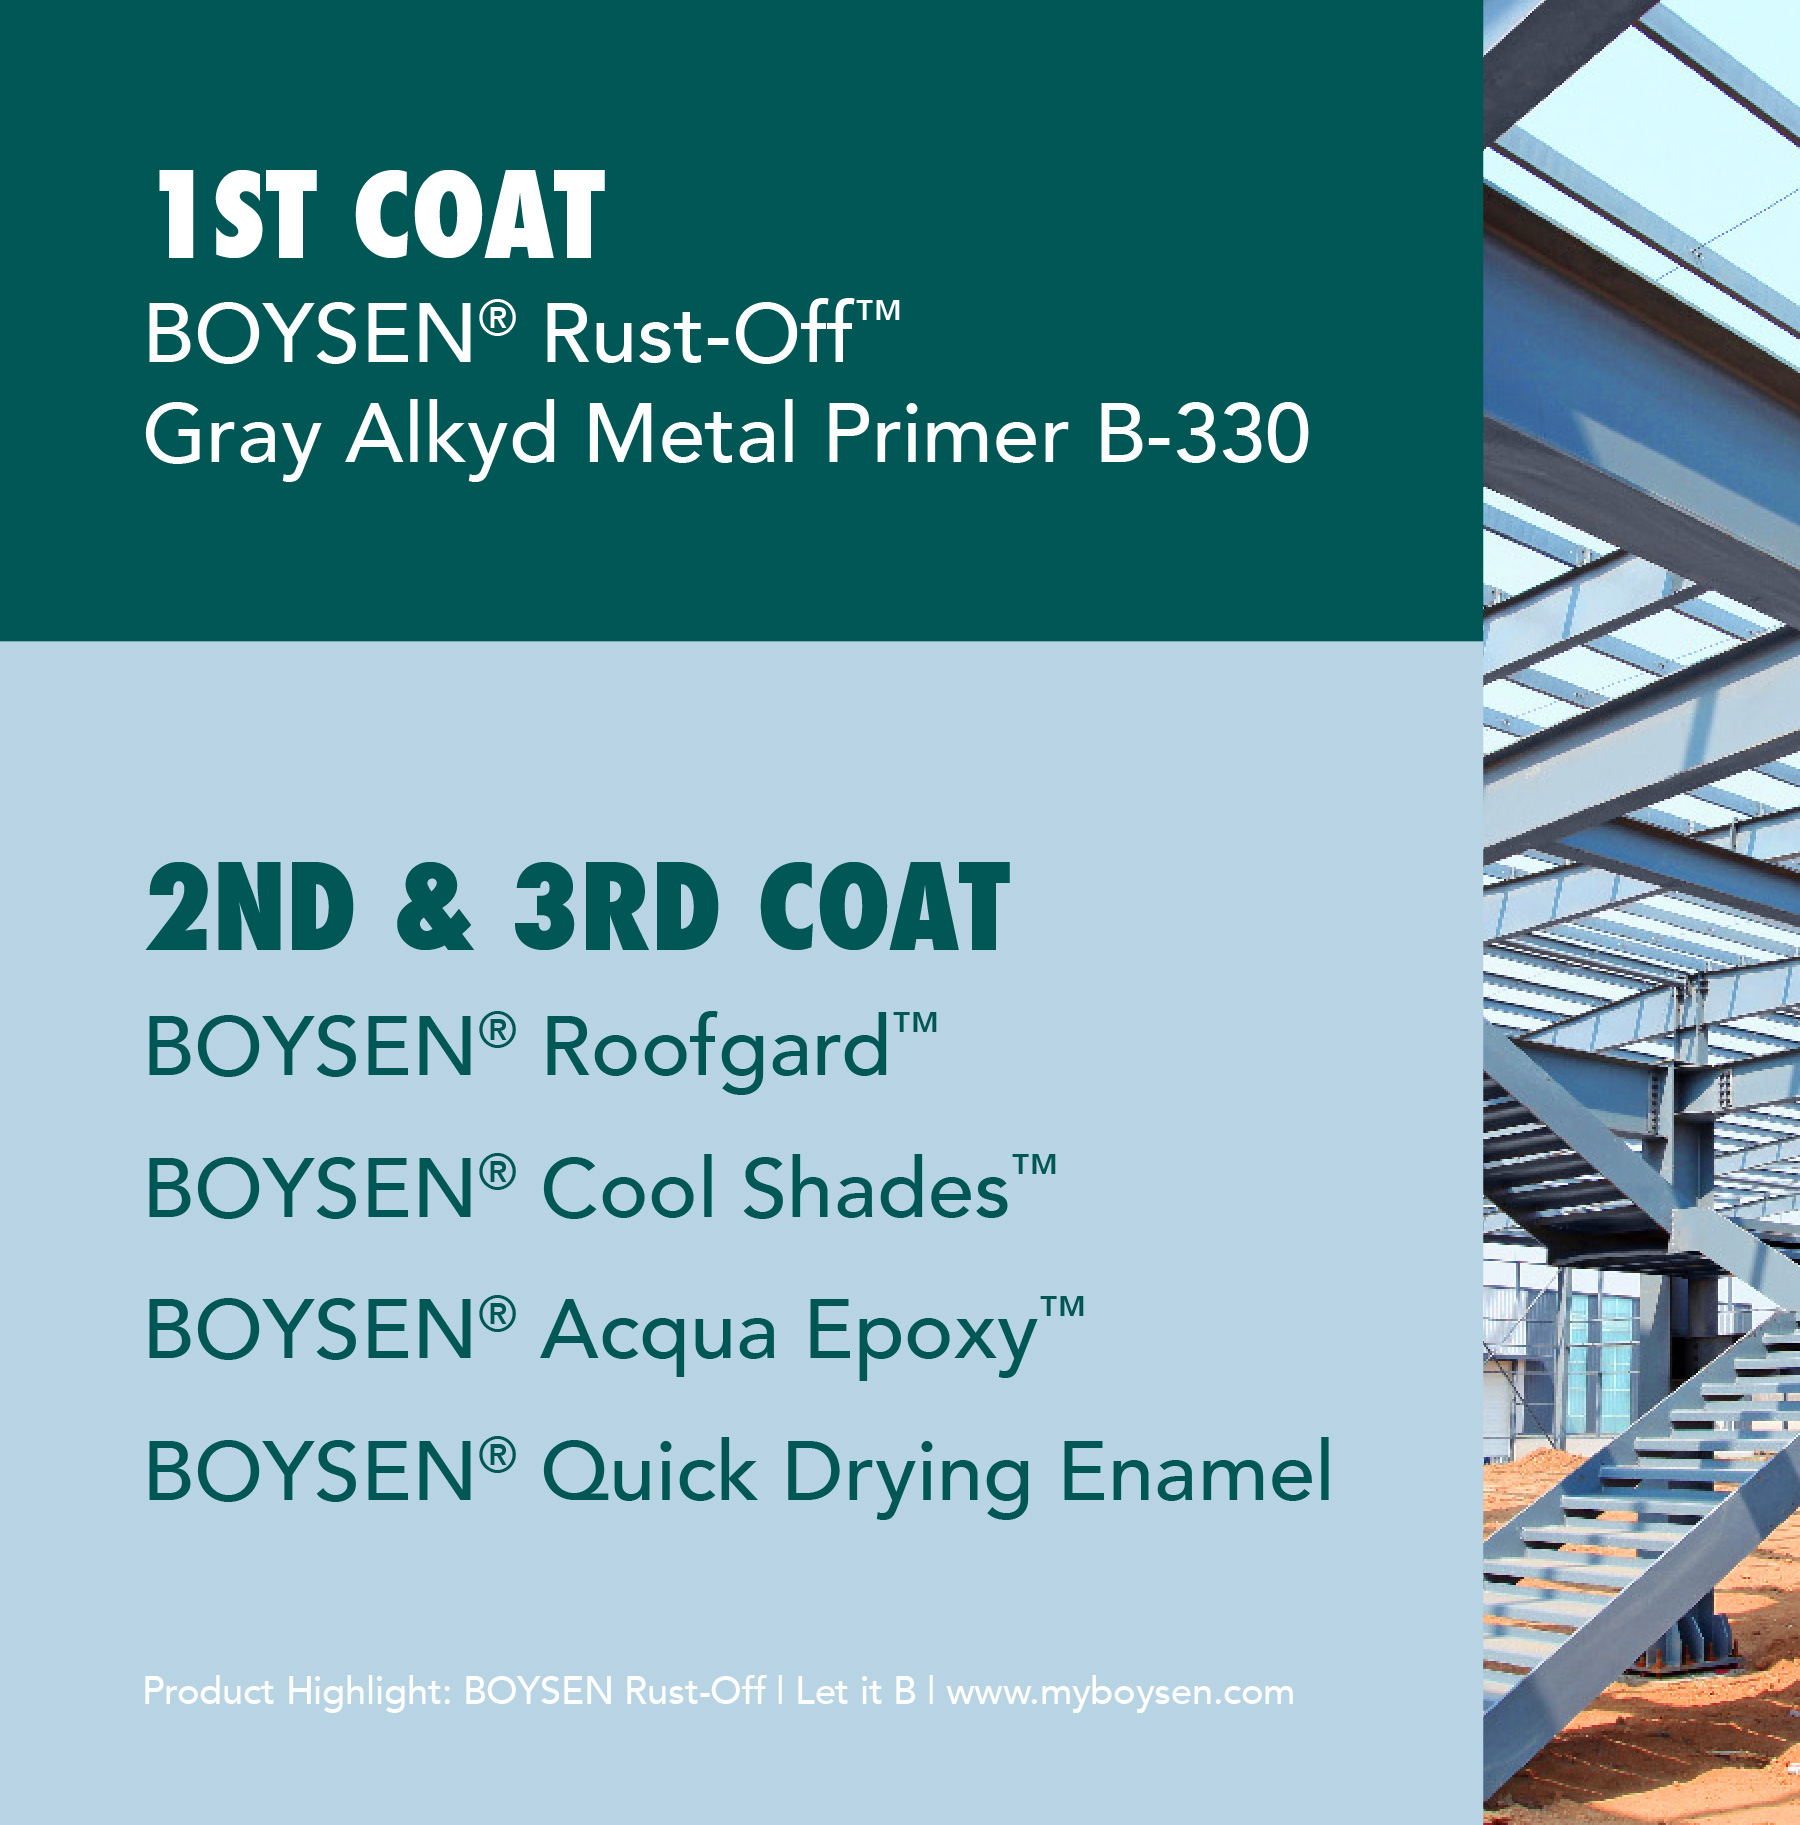 Product Highlight: BOYSEN Rust-Off | MyBoysen